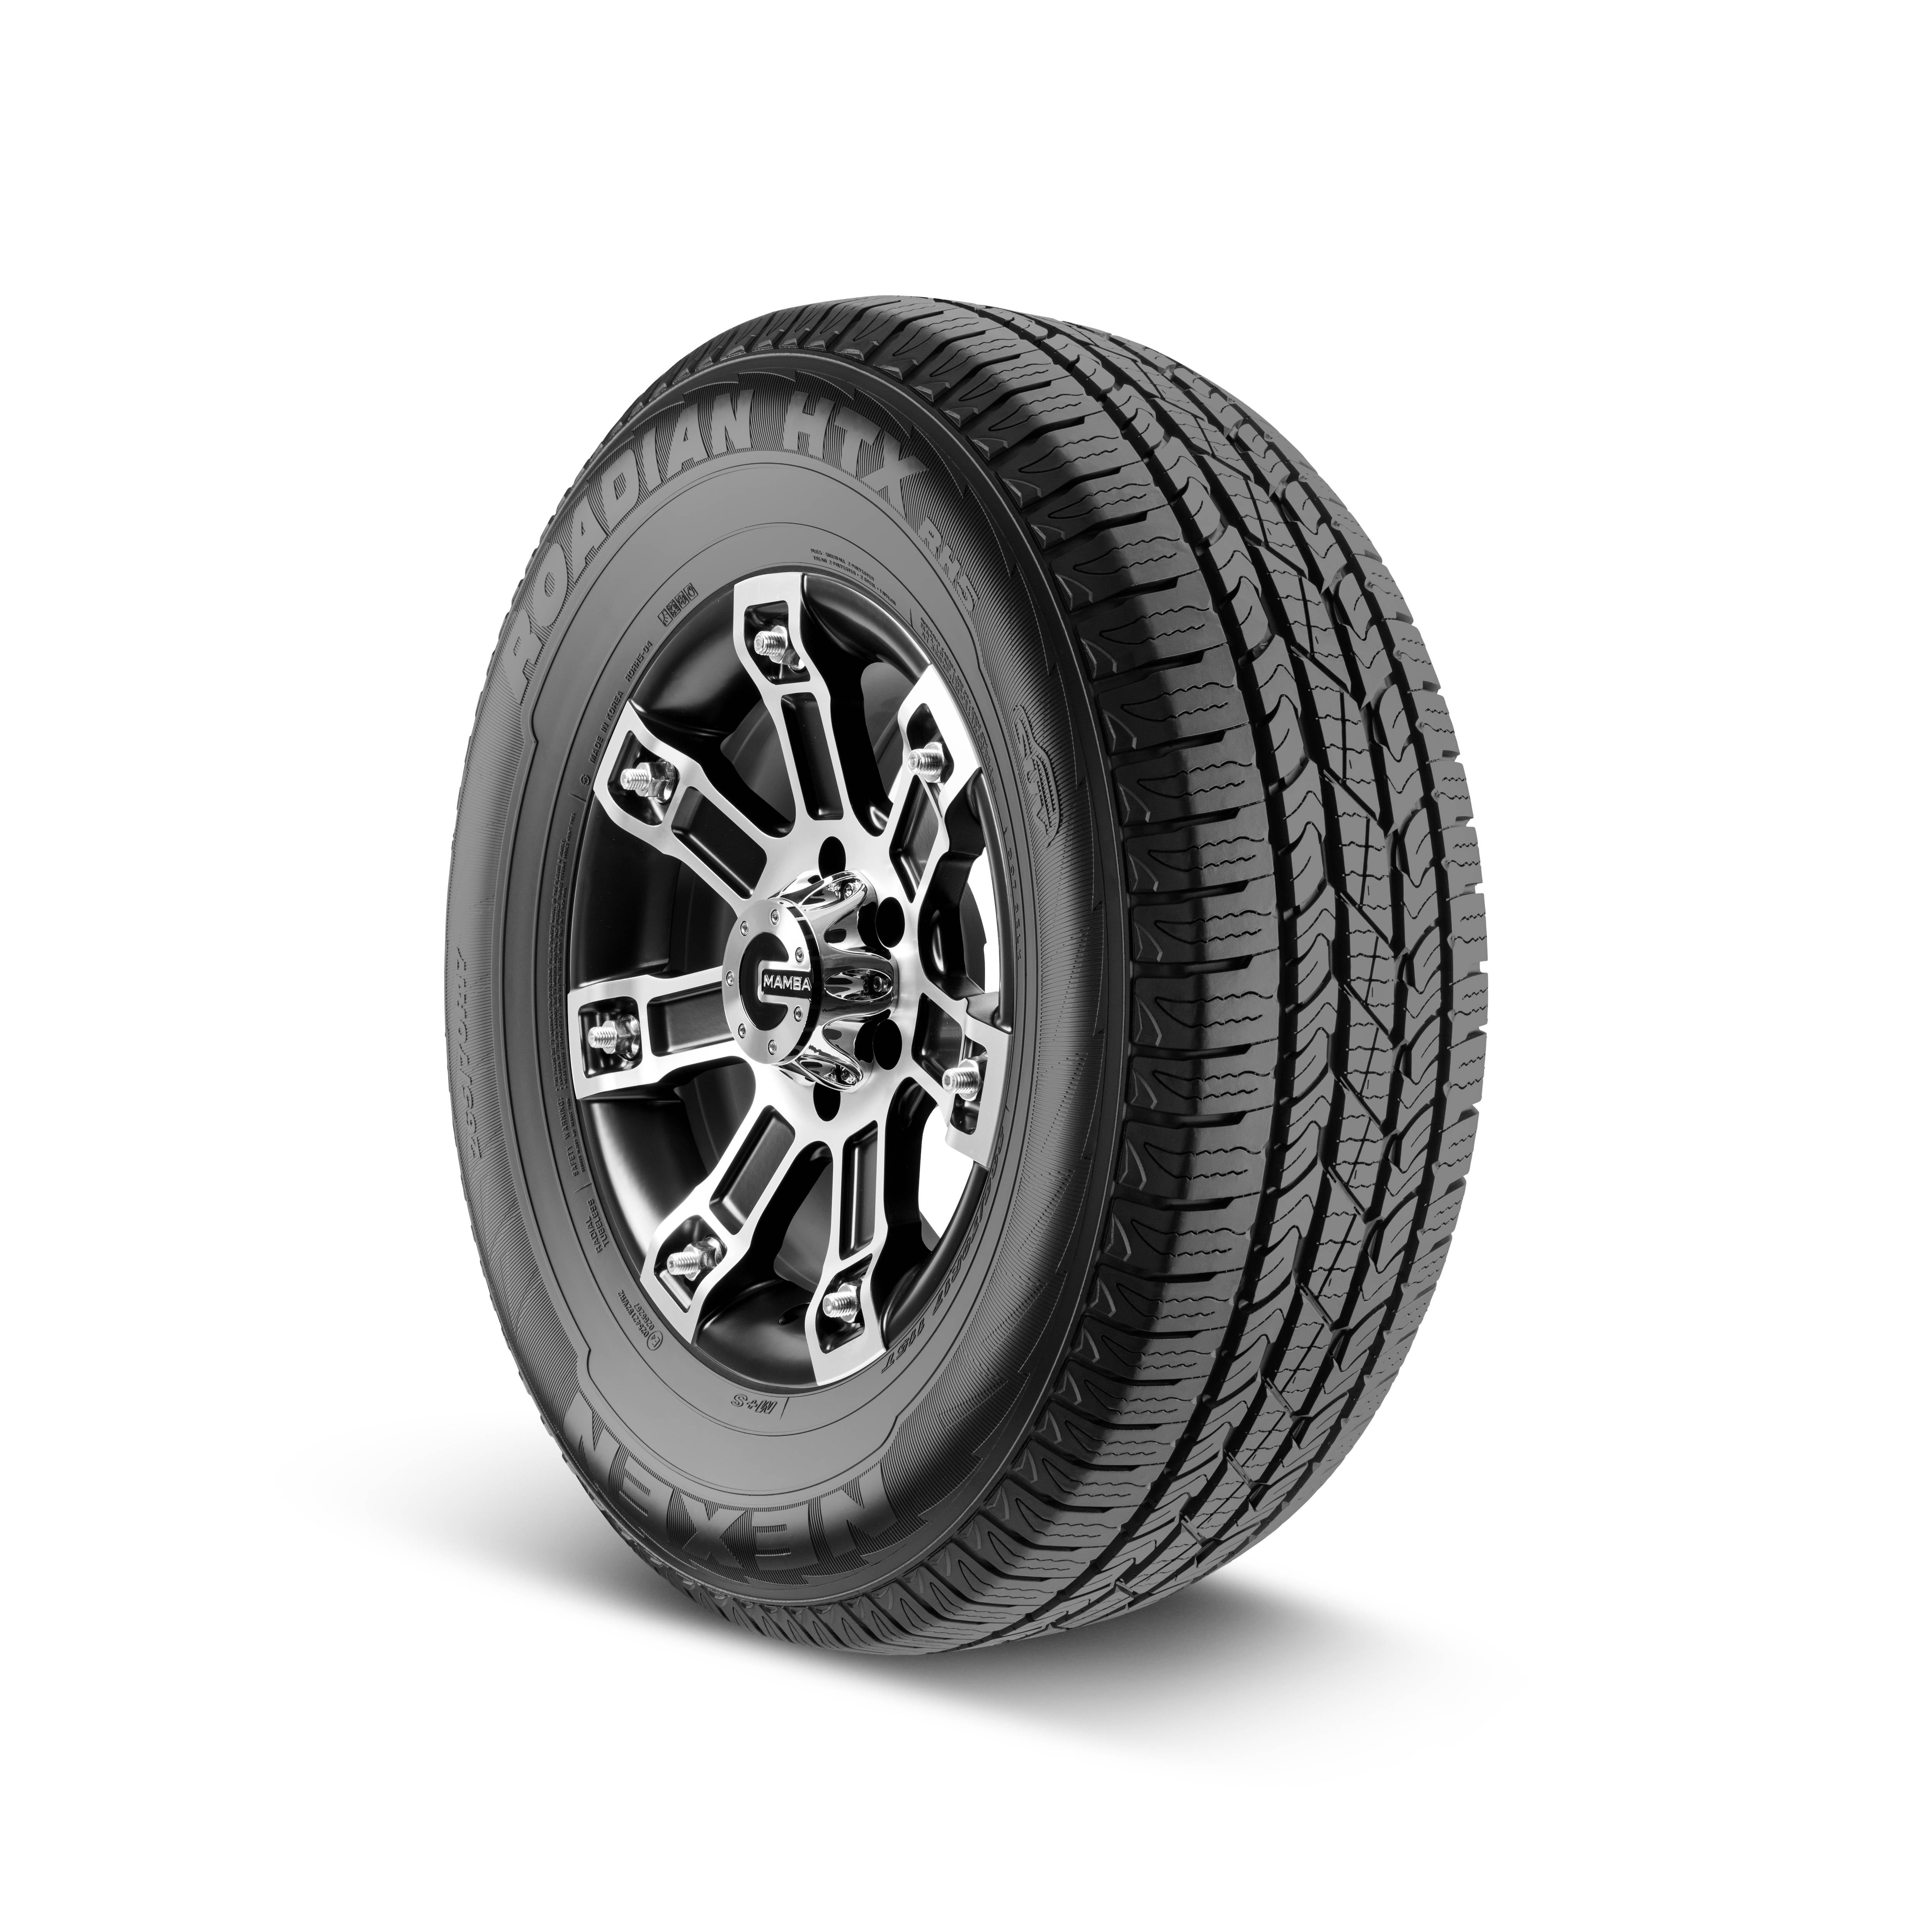 265/60R18 110H Nexen Roadian HP All-Season Radial Tire 